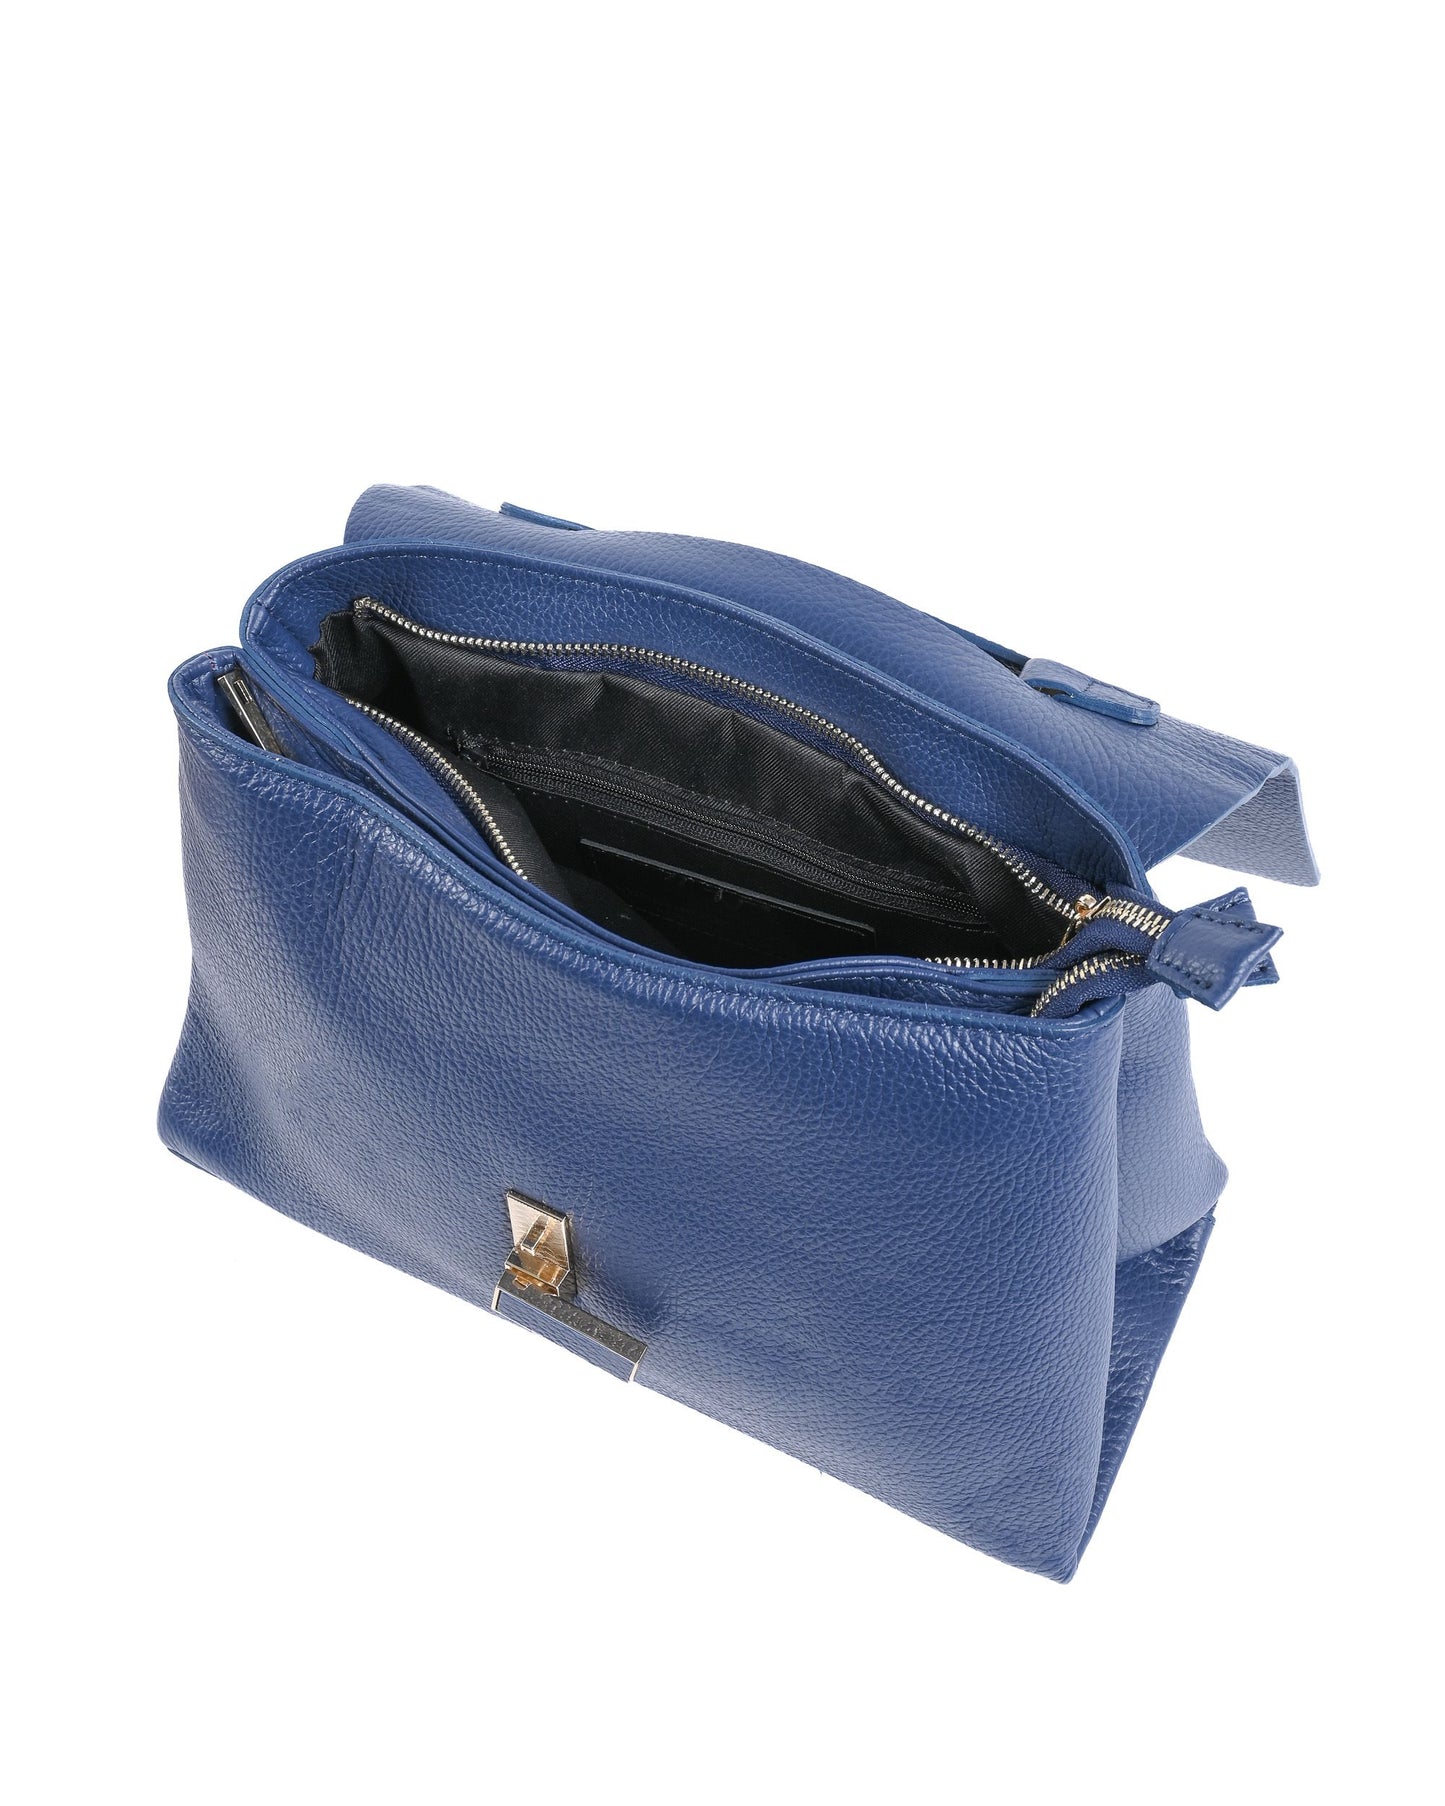 V Italia Womens Handbag 10520 DOLLARO BLUE JEANS